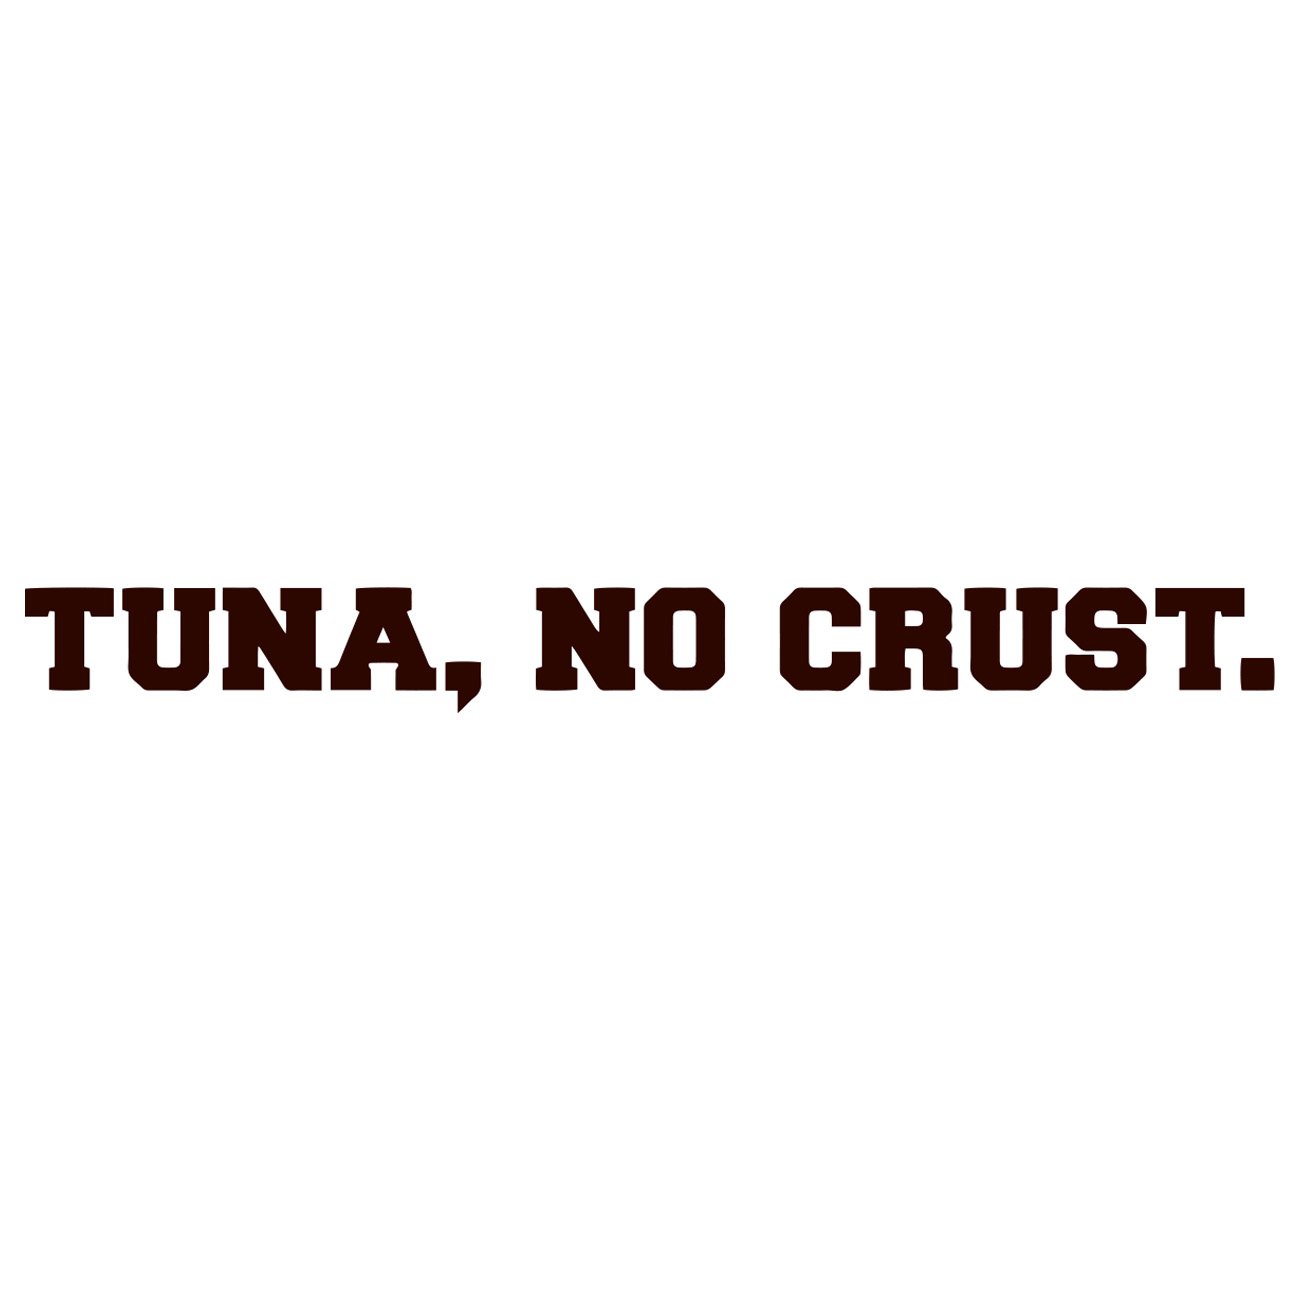 Tuna no crust